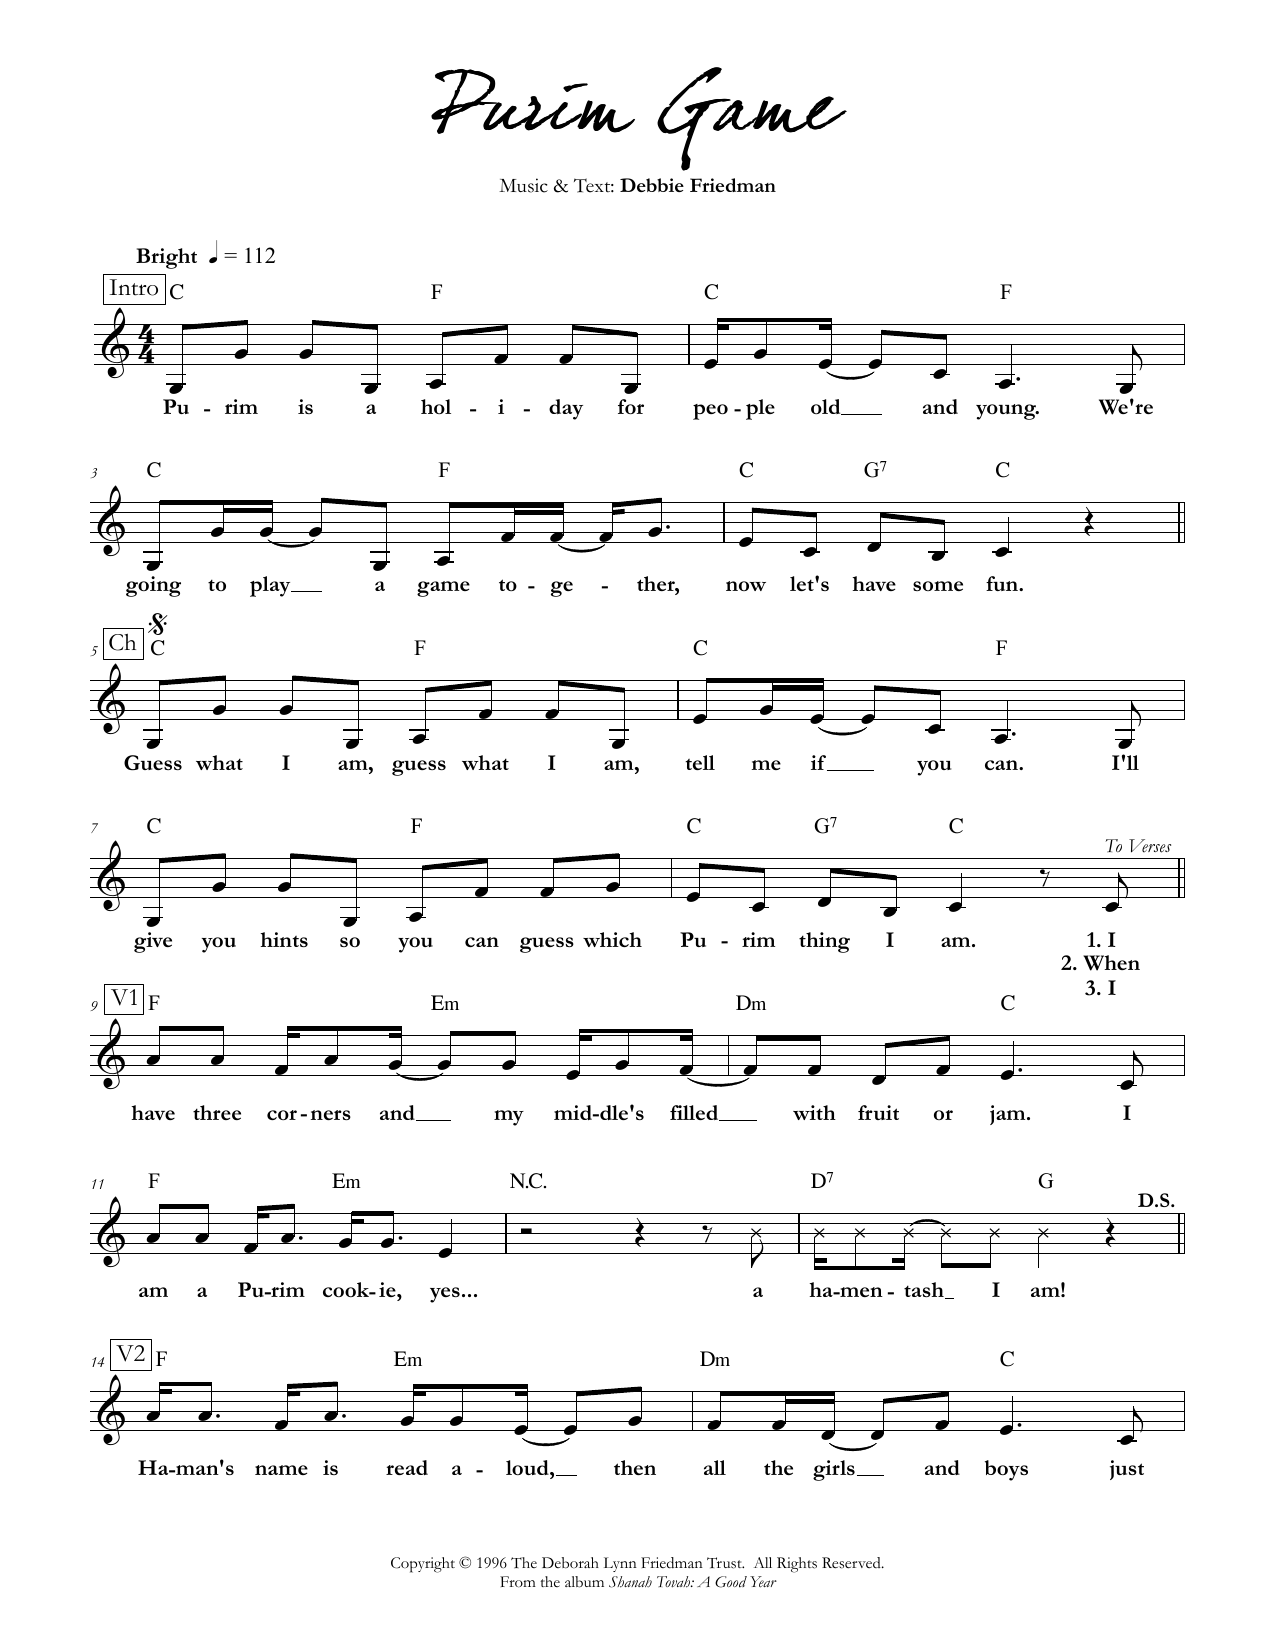 Debbie Friedman Purim Game Sheet Music Notes & Chords for Lead Sheet / Fake Book - Download or Print PDF